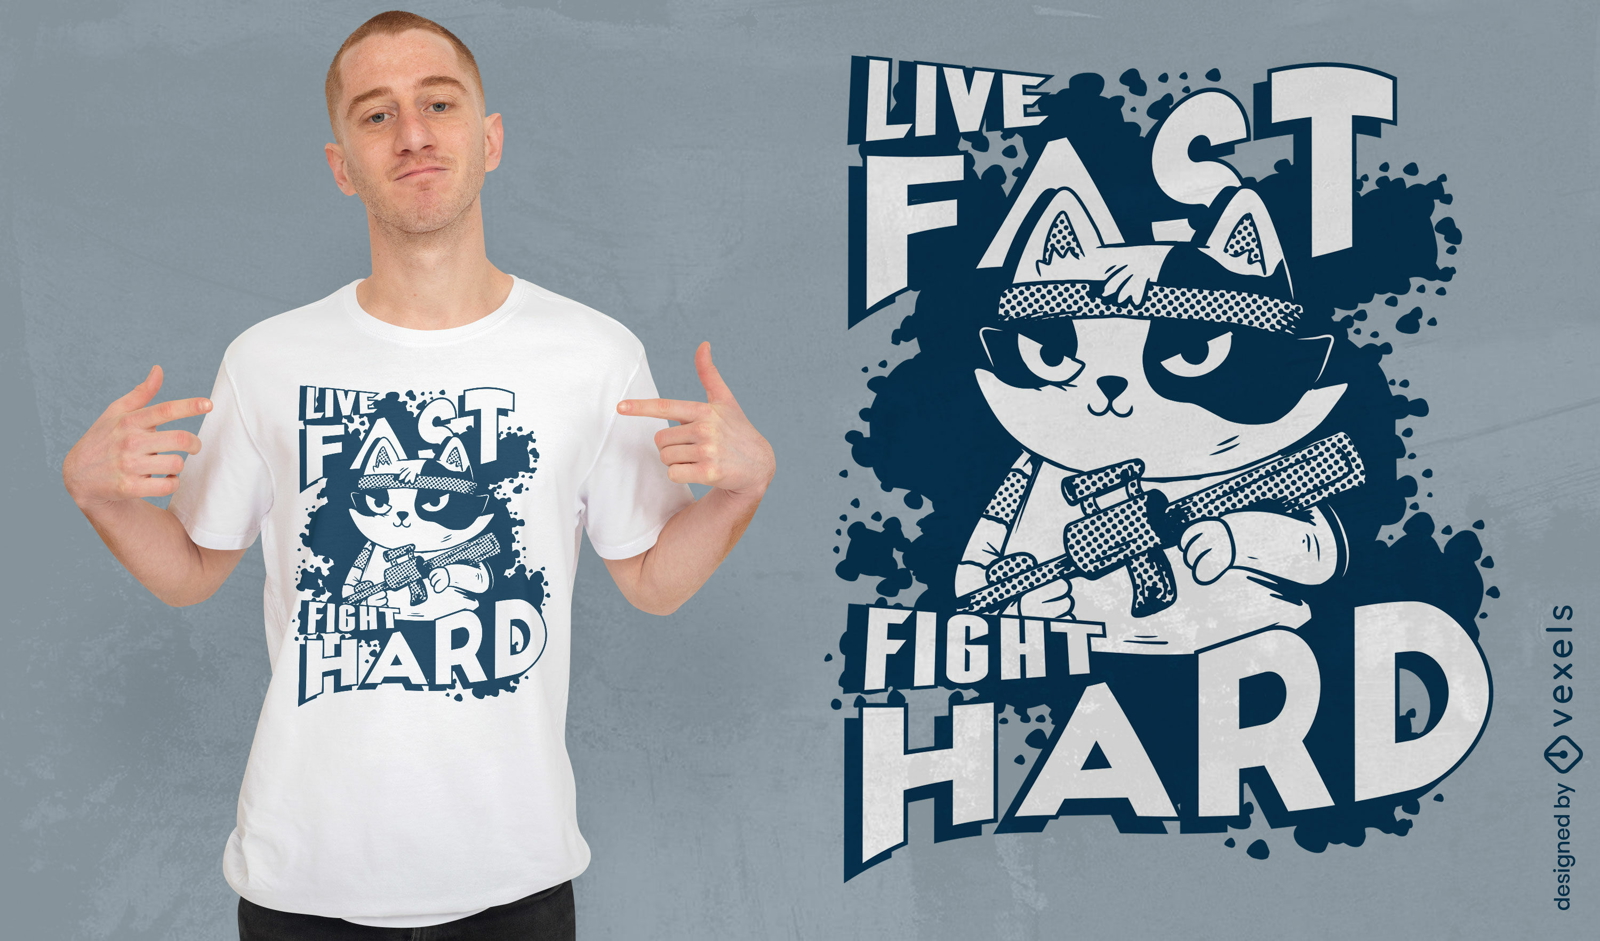 Live fast, fight hard cat cartoon t-shirt design